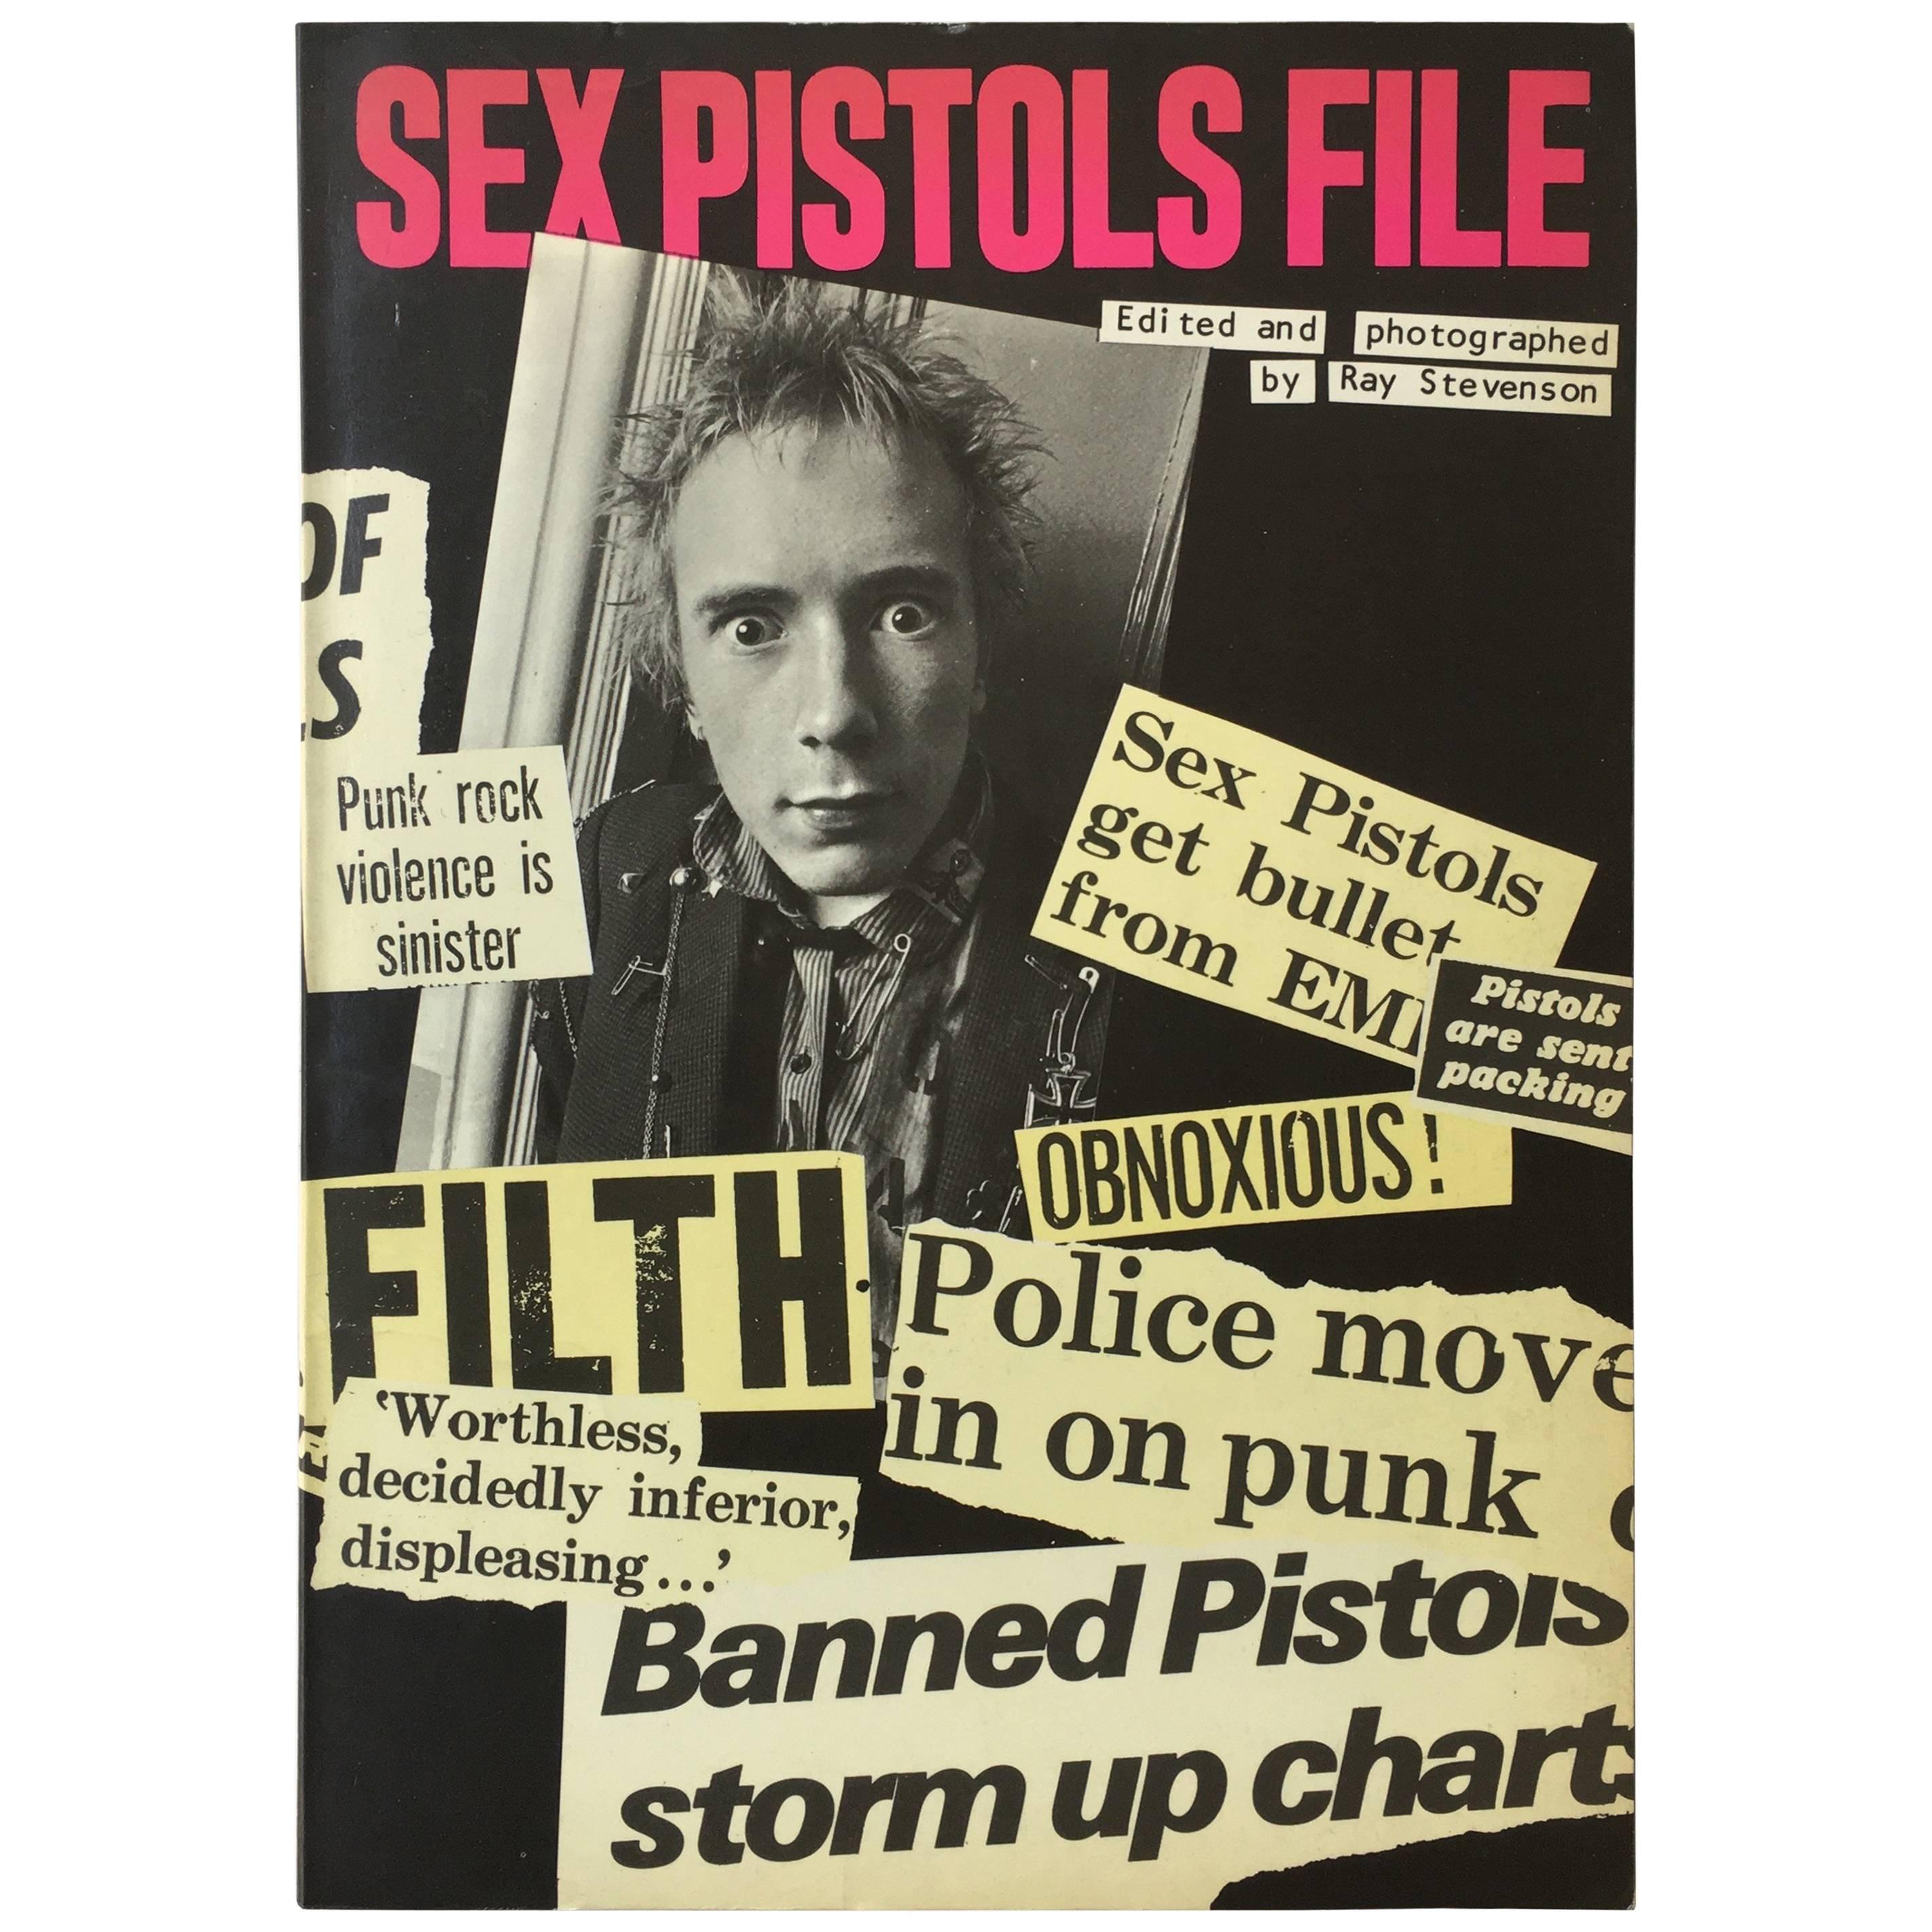 Sex Pistols File, Ray Stevenson First Edition, 1978